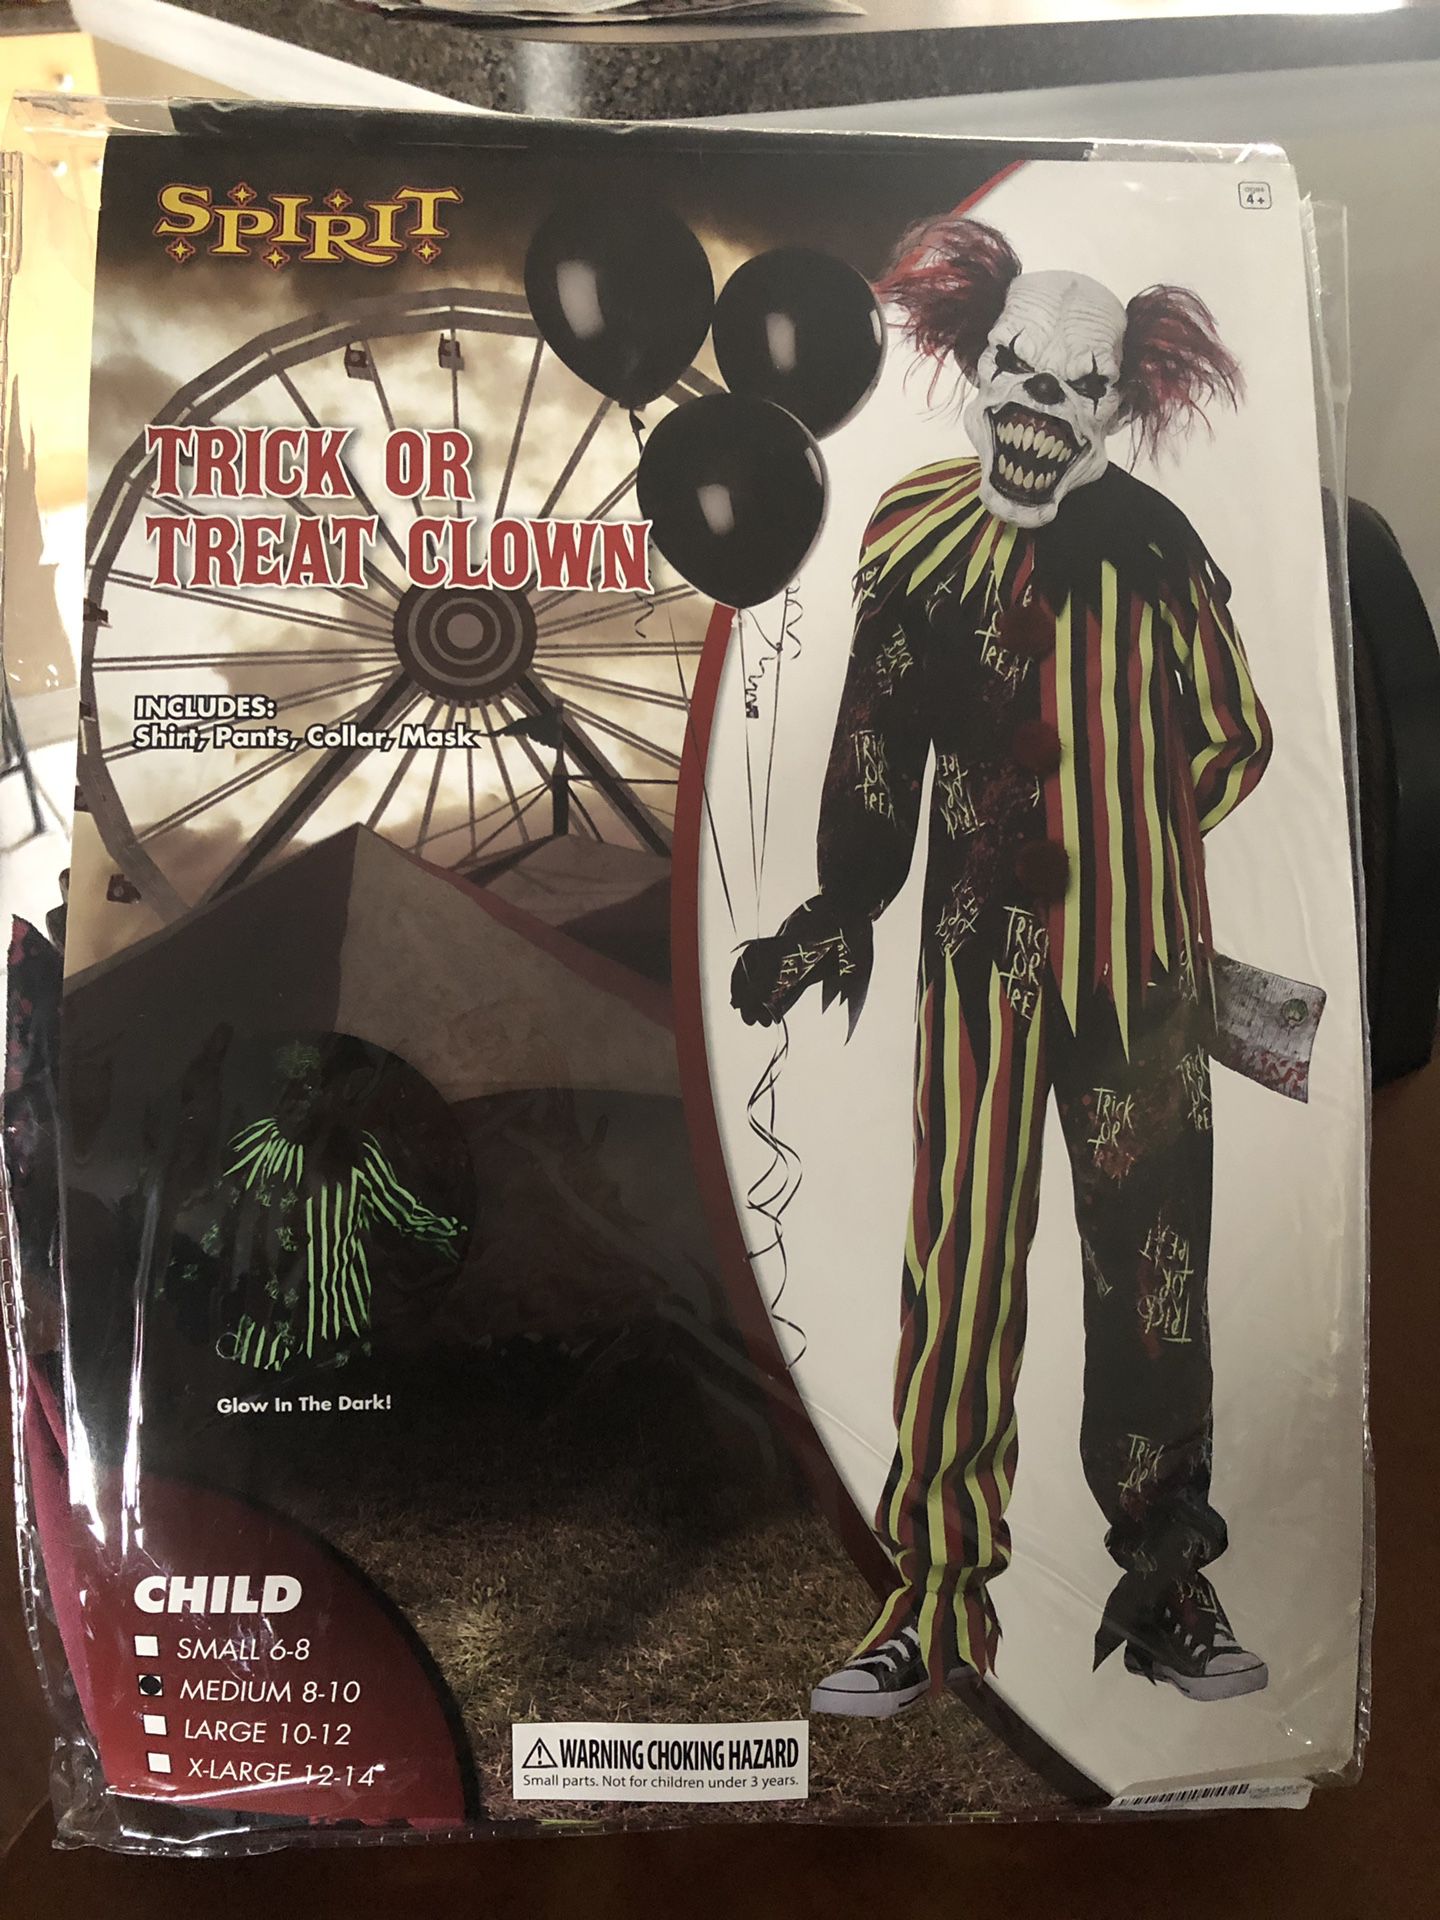 Trick or treat kids clown costume